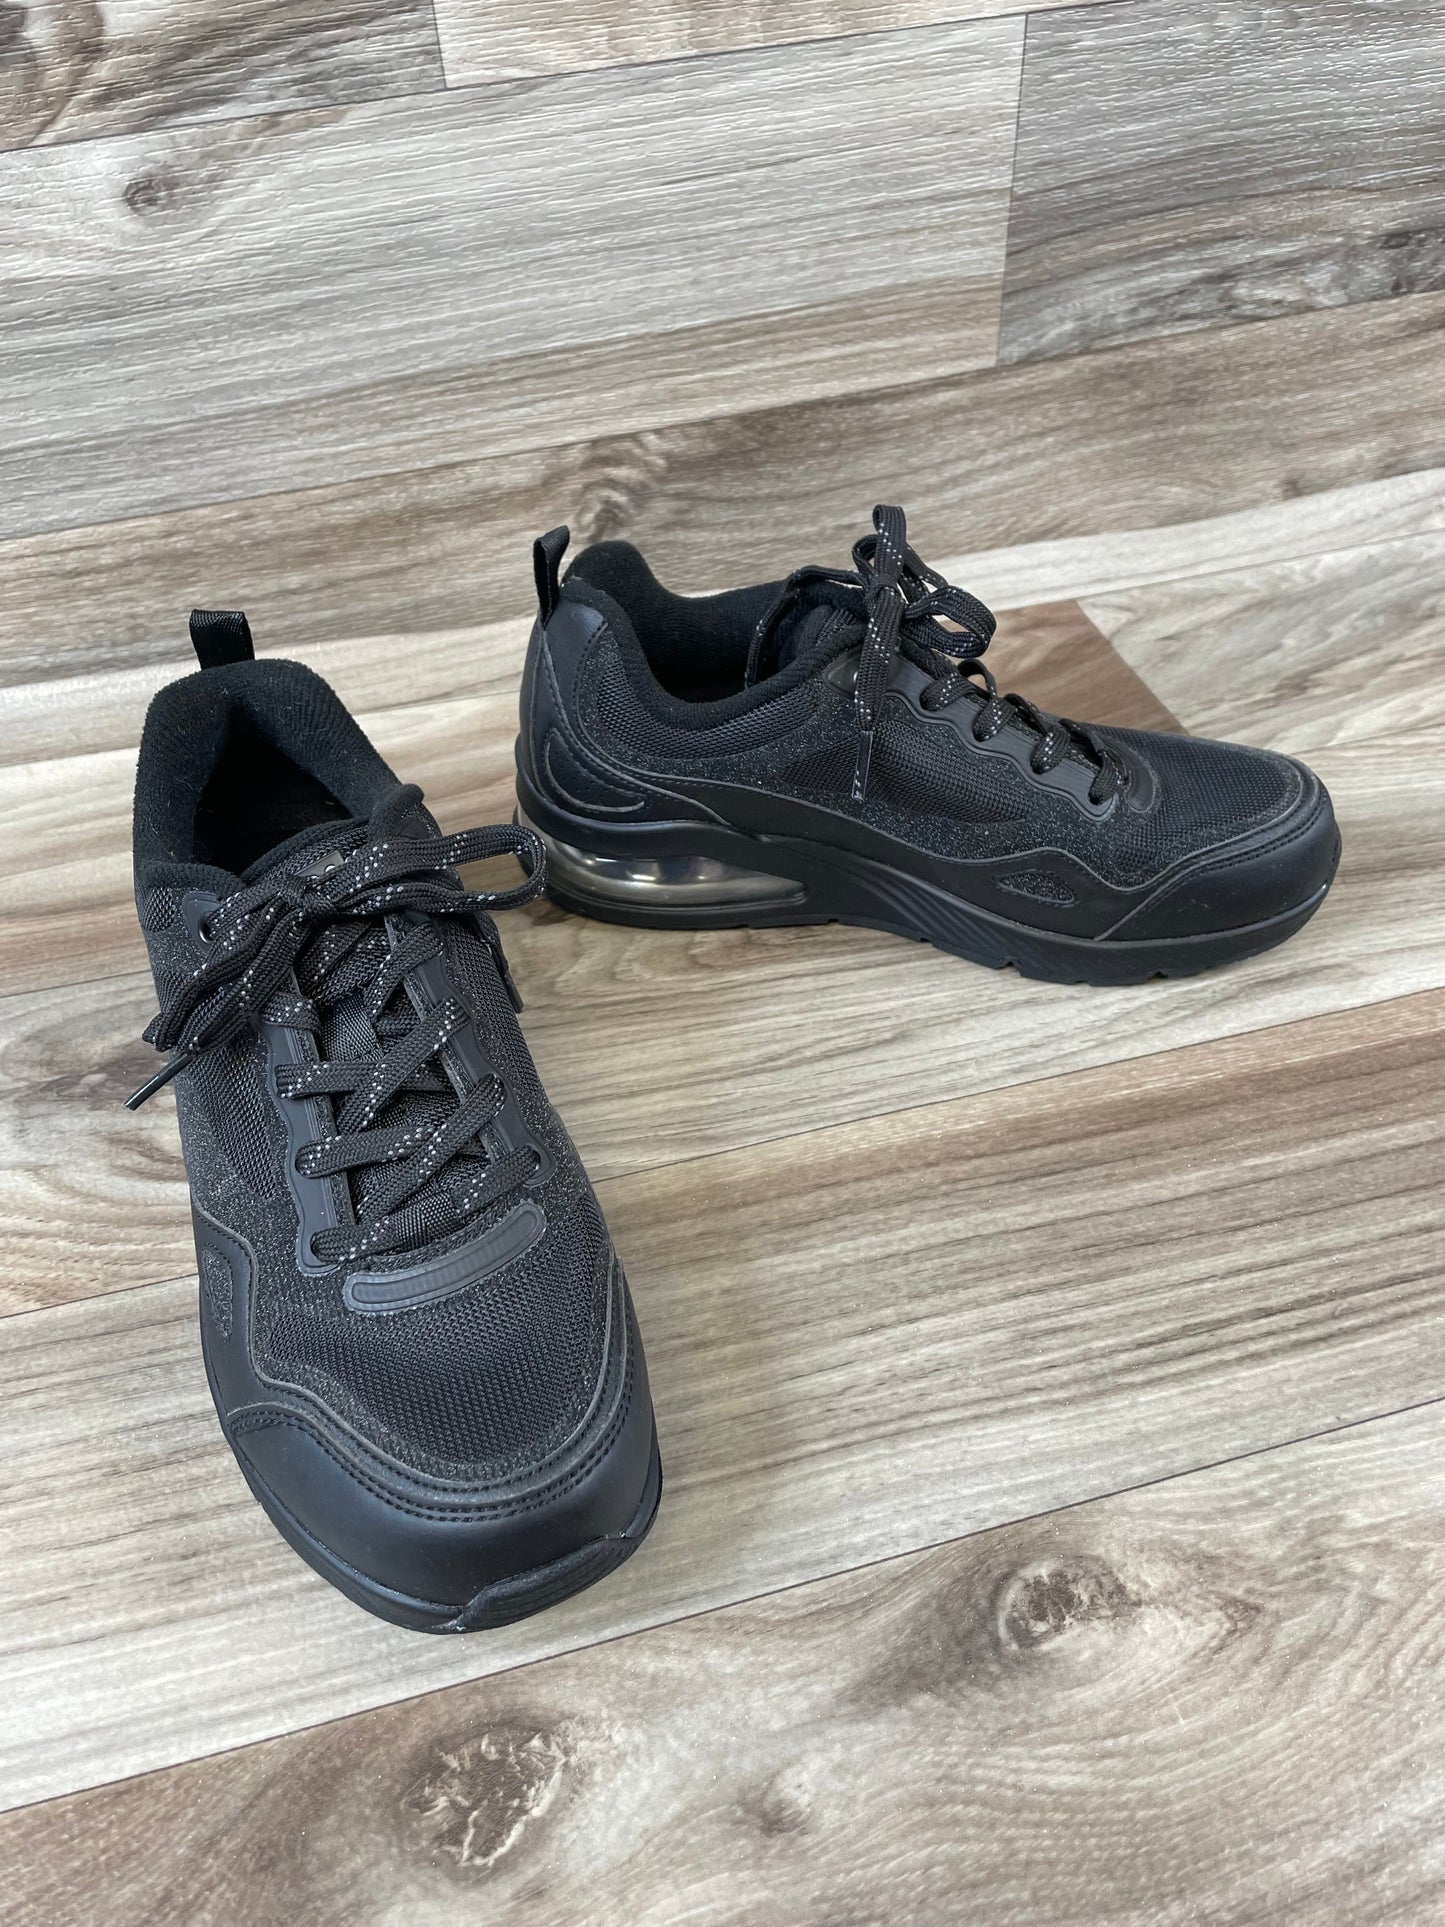 Black Shoes Athletic Skechers, Size 8.5